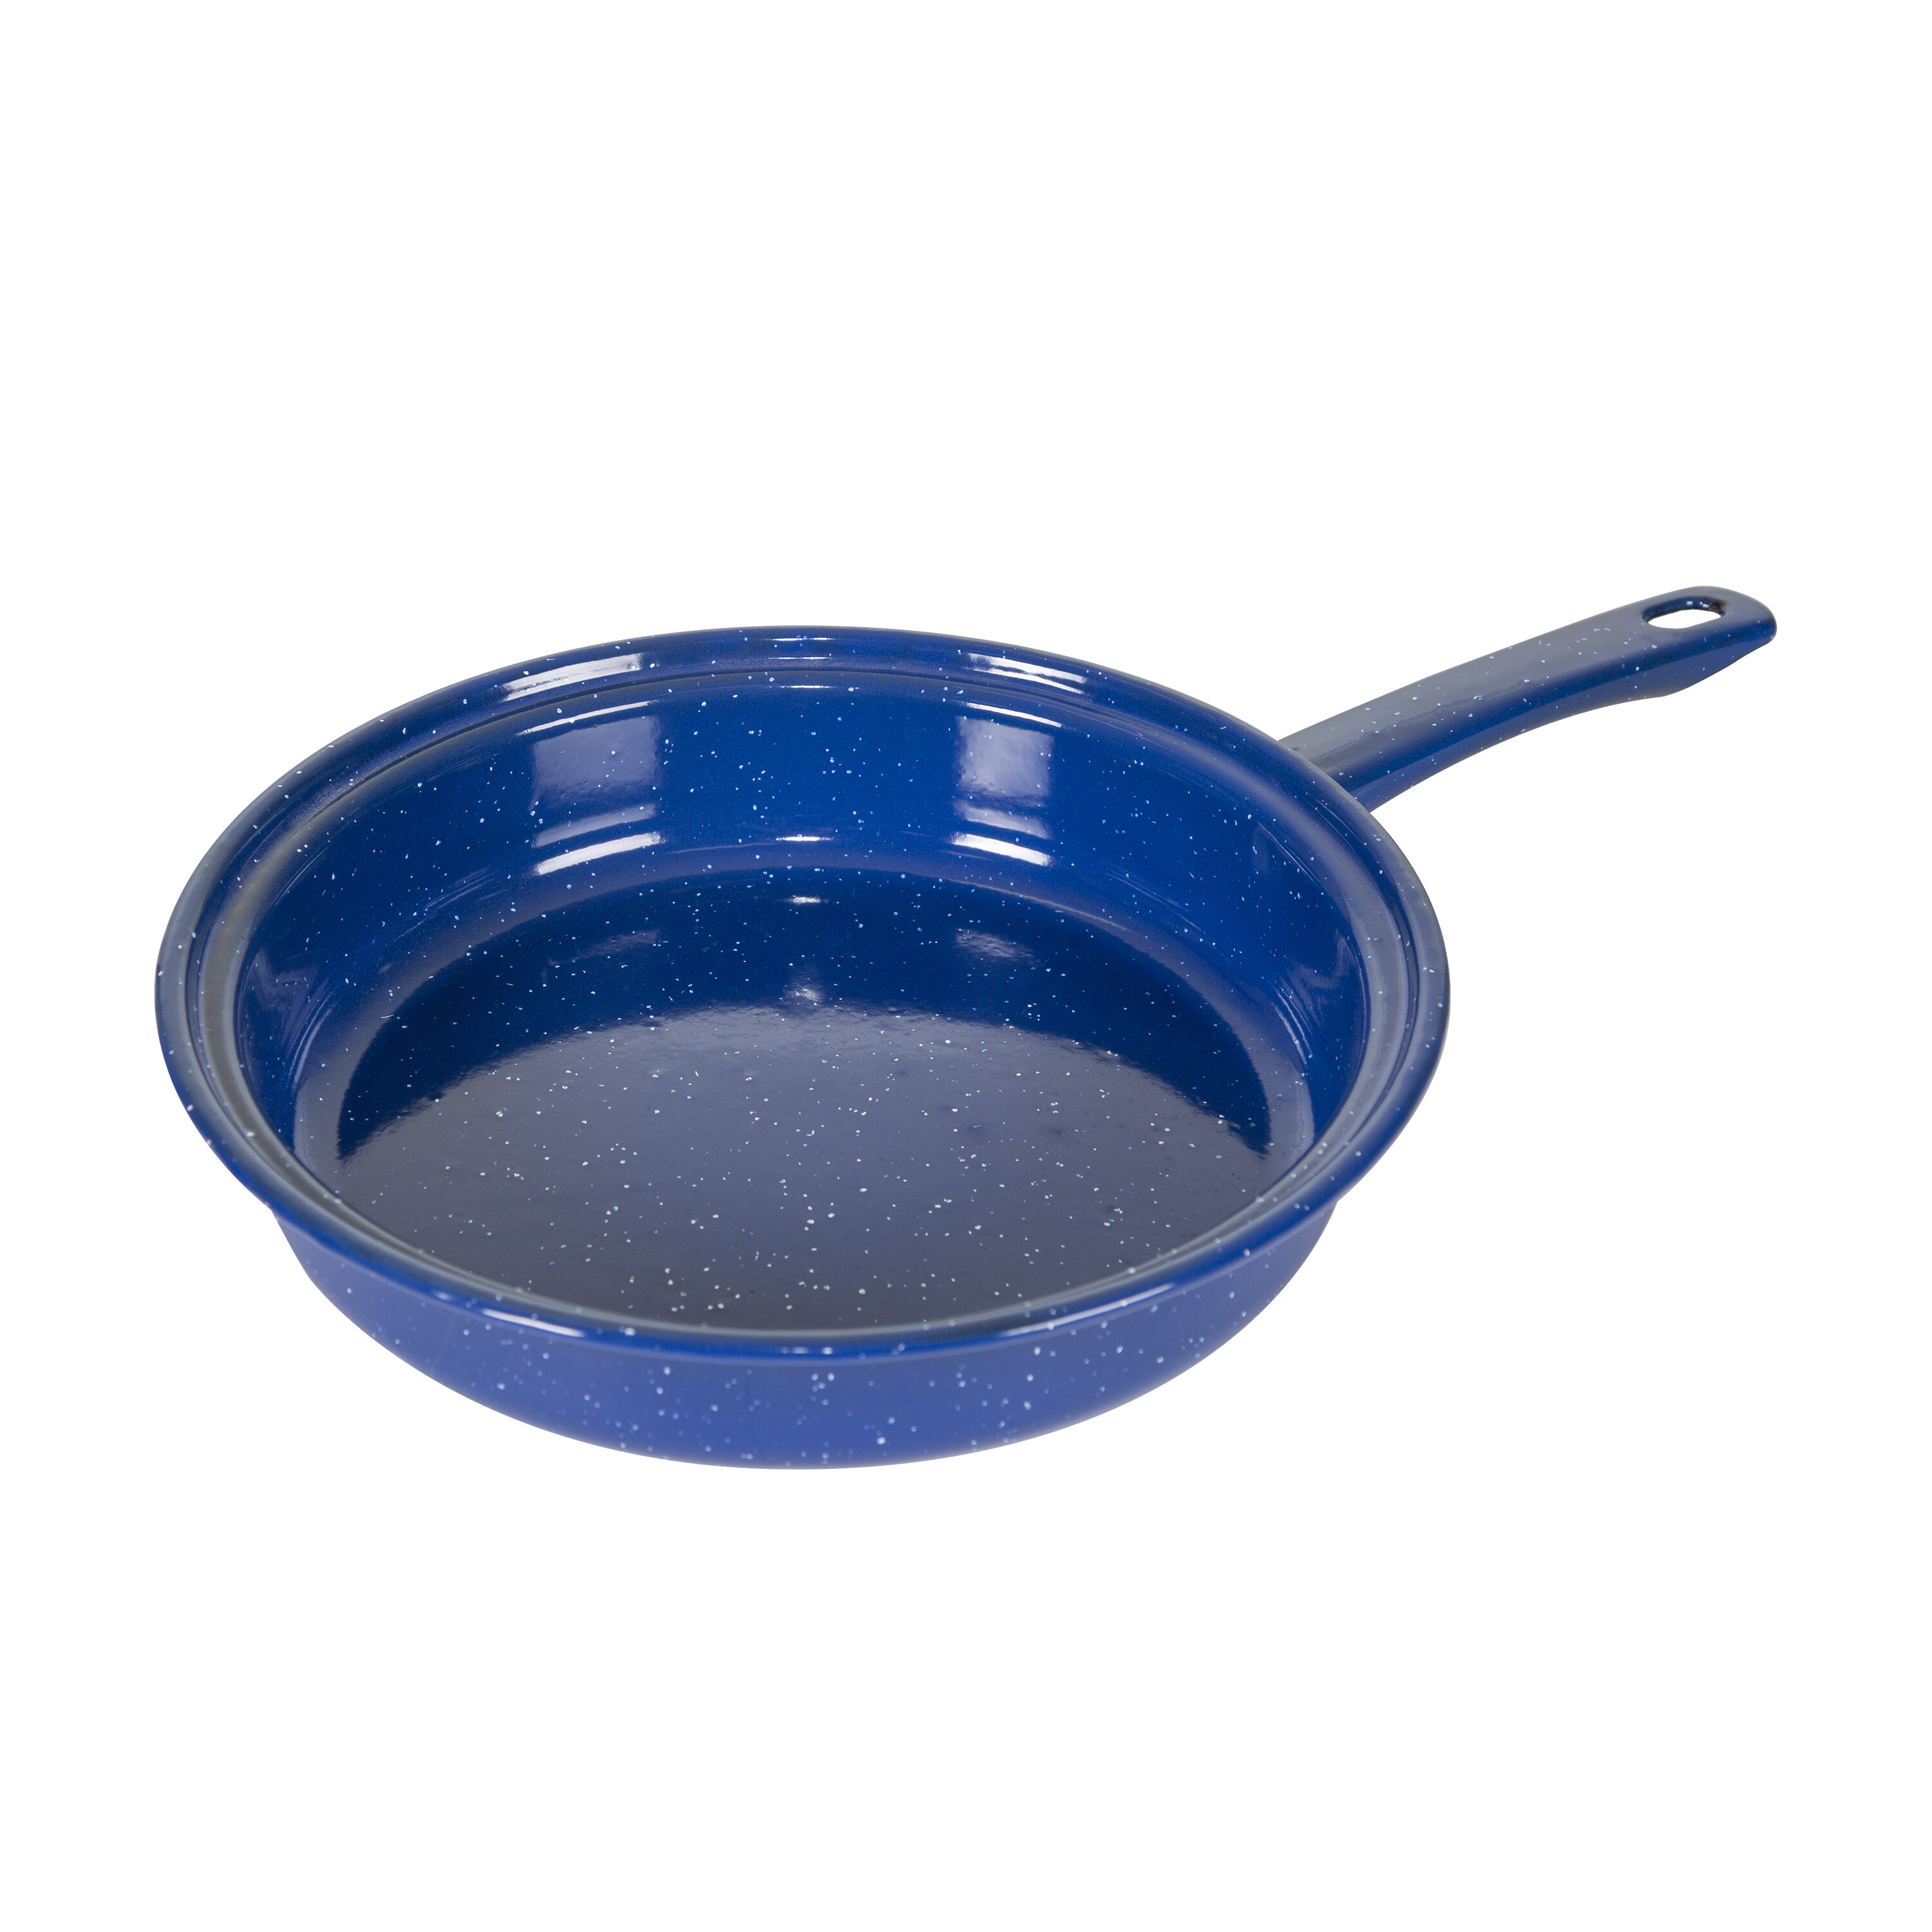 Enamel Cook Pot with Lid - Stansport